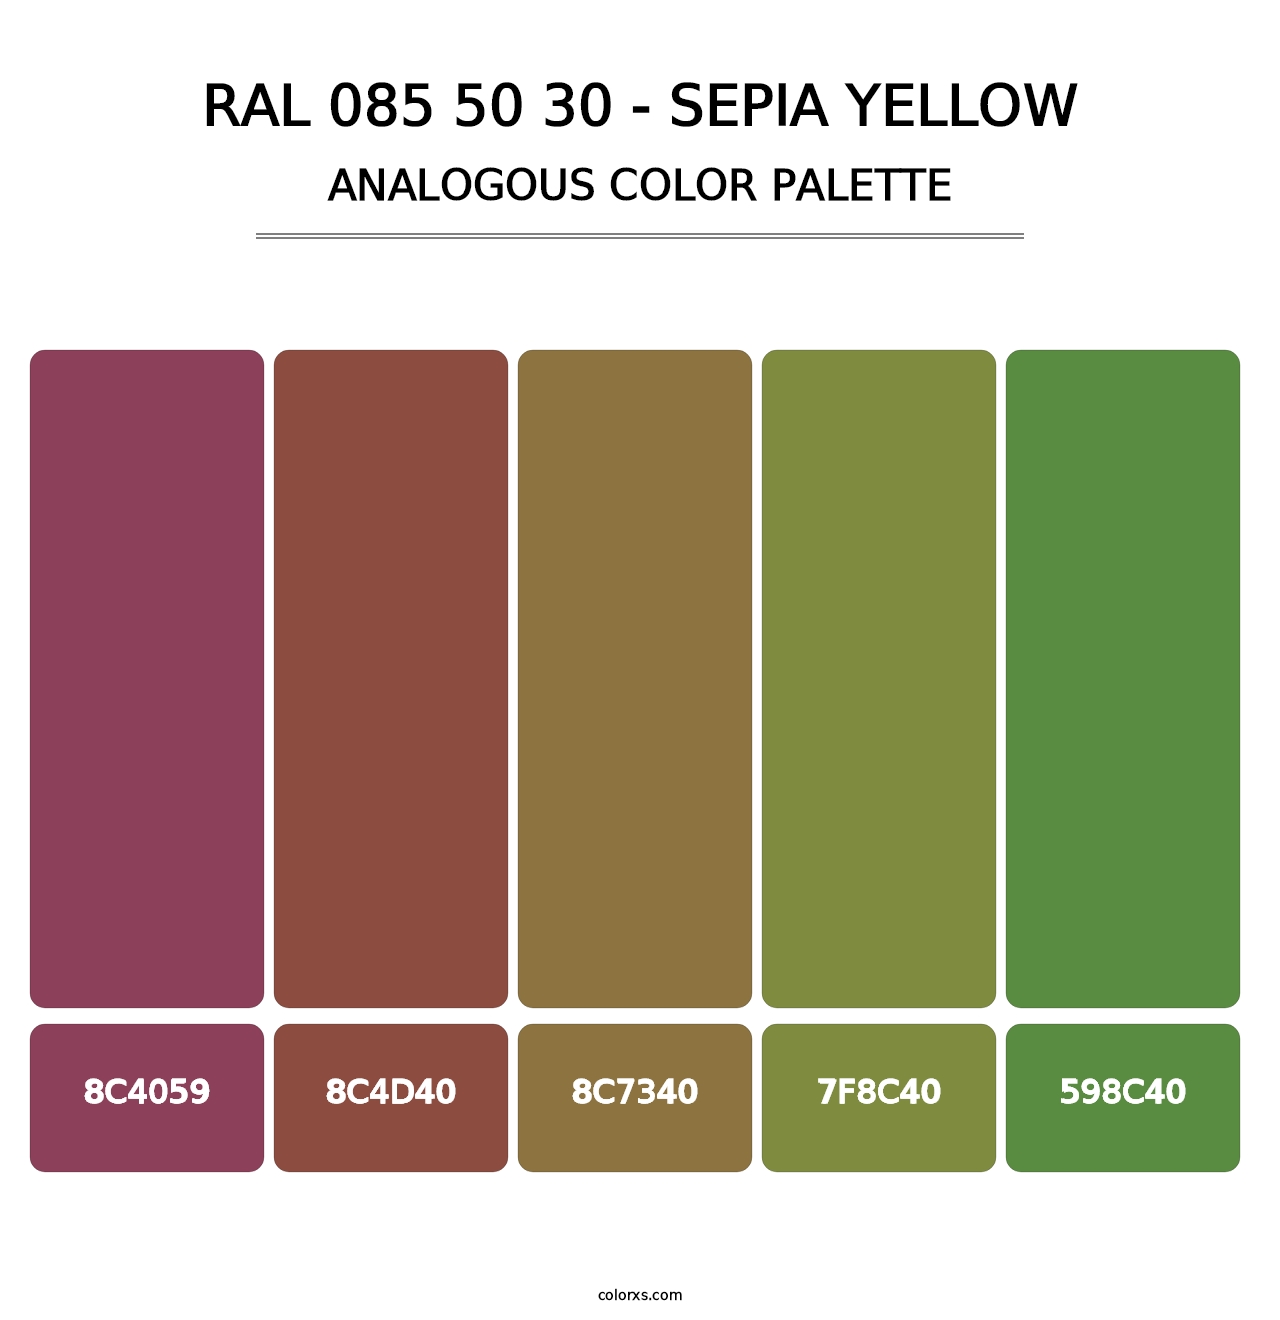 RAL 085 50 30 - Sepia Yellow - Analogous Color Palette